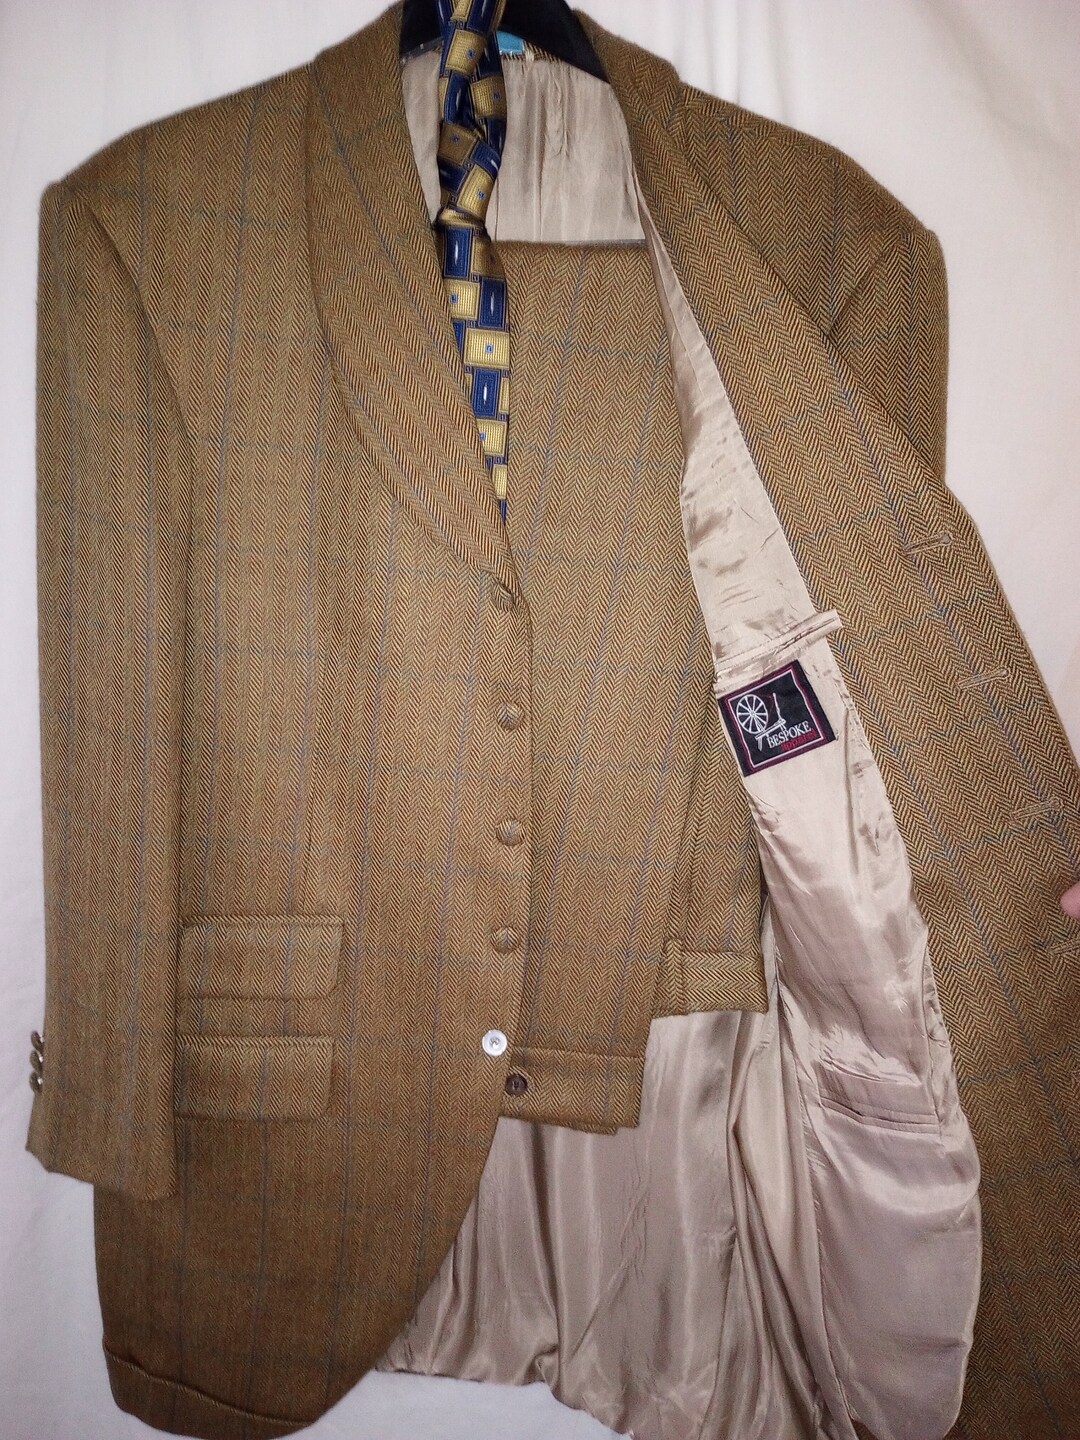 David Corbitt Made Bespoke Suit: Jacket Pants and Tie - Etsy